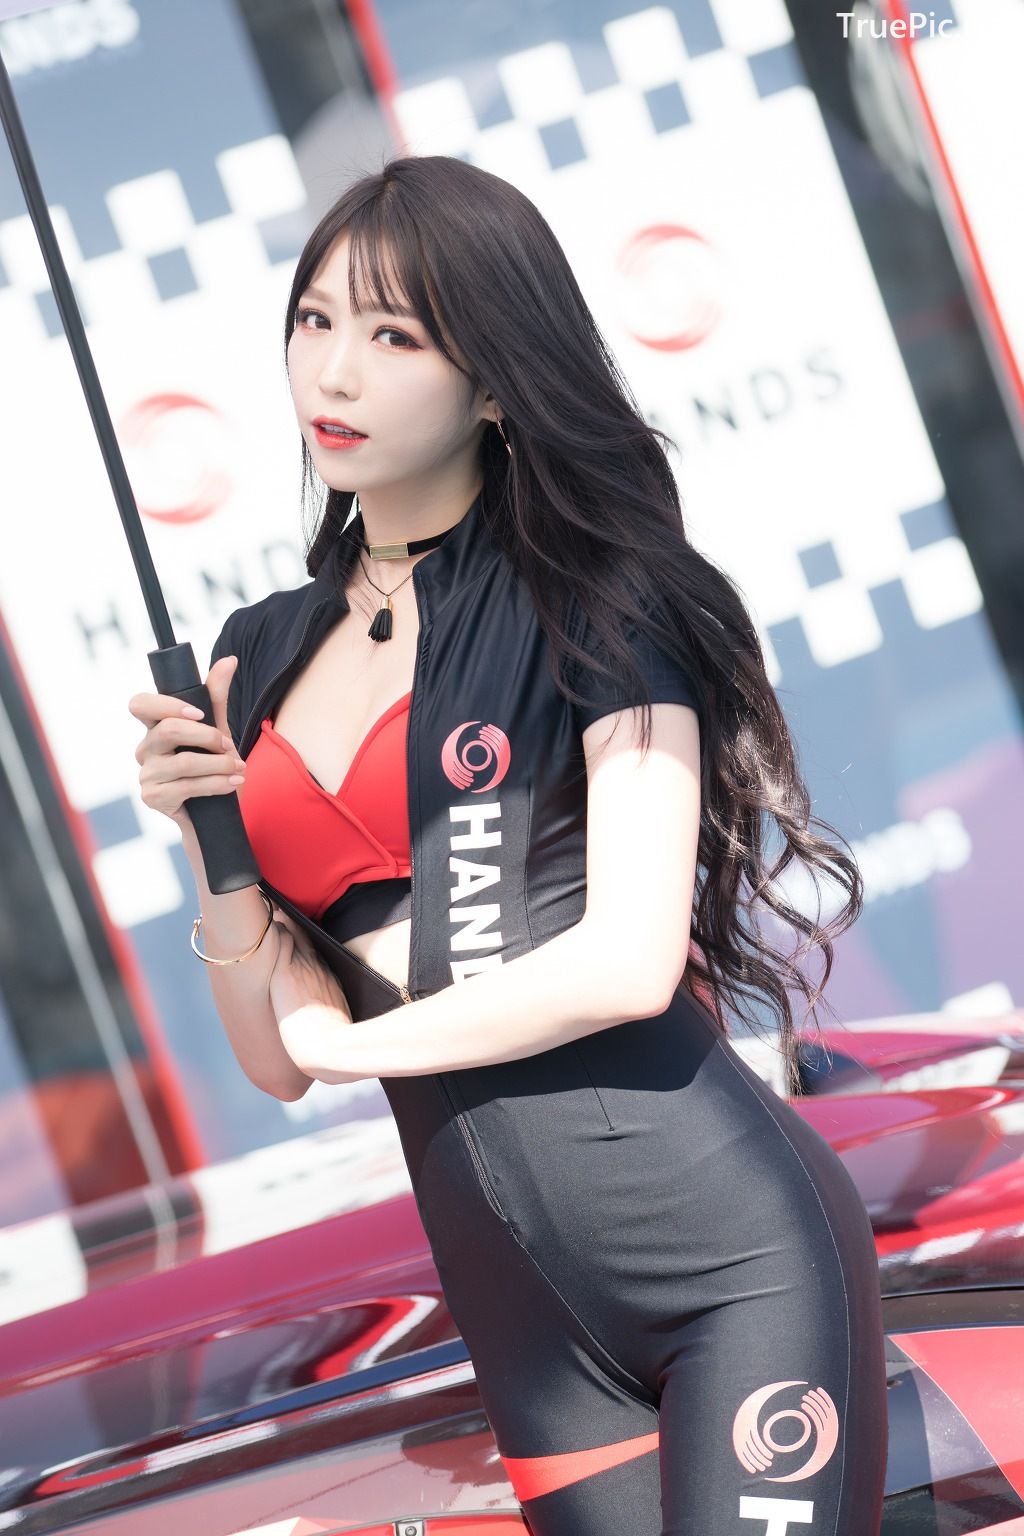 Image-Korean-Racing-Model-Lee-Eun-Hye-At-Incheon-Korea-Tuning-Festival-TruePic.net- Picture-208